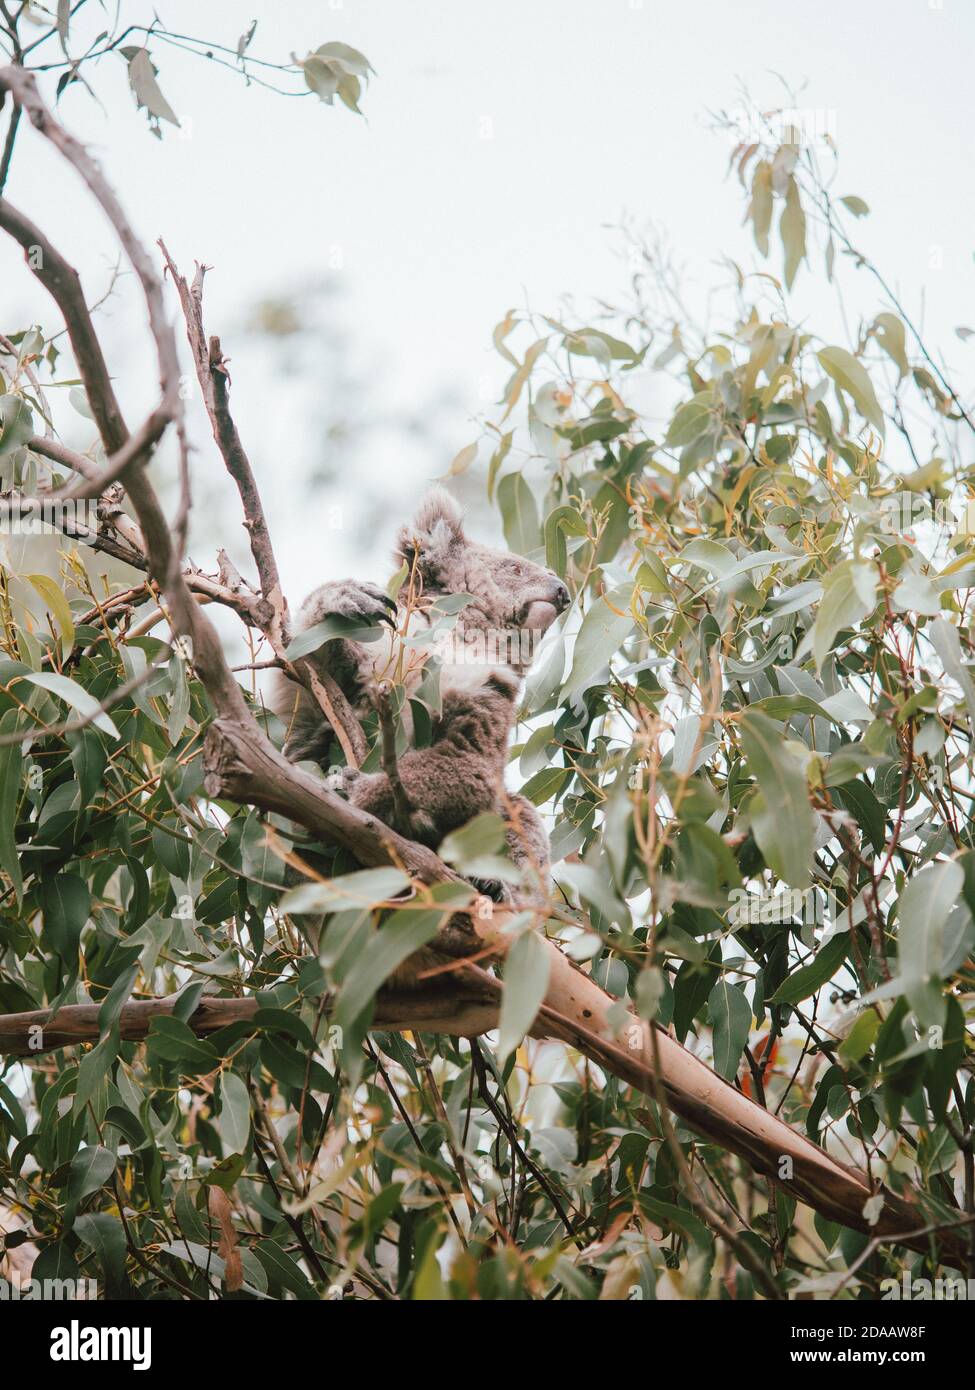 A wild koala in the trees, feeding and resting. Western Australia Stock Photo